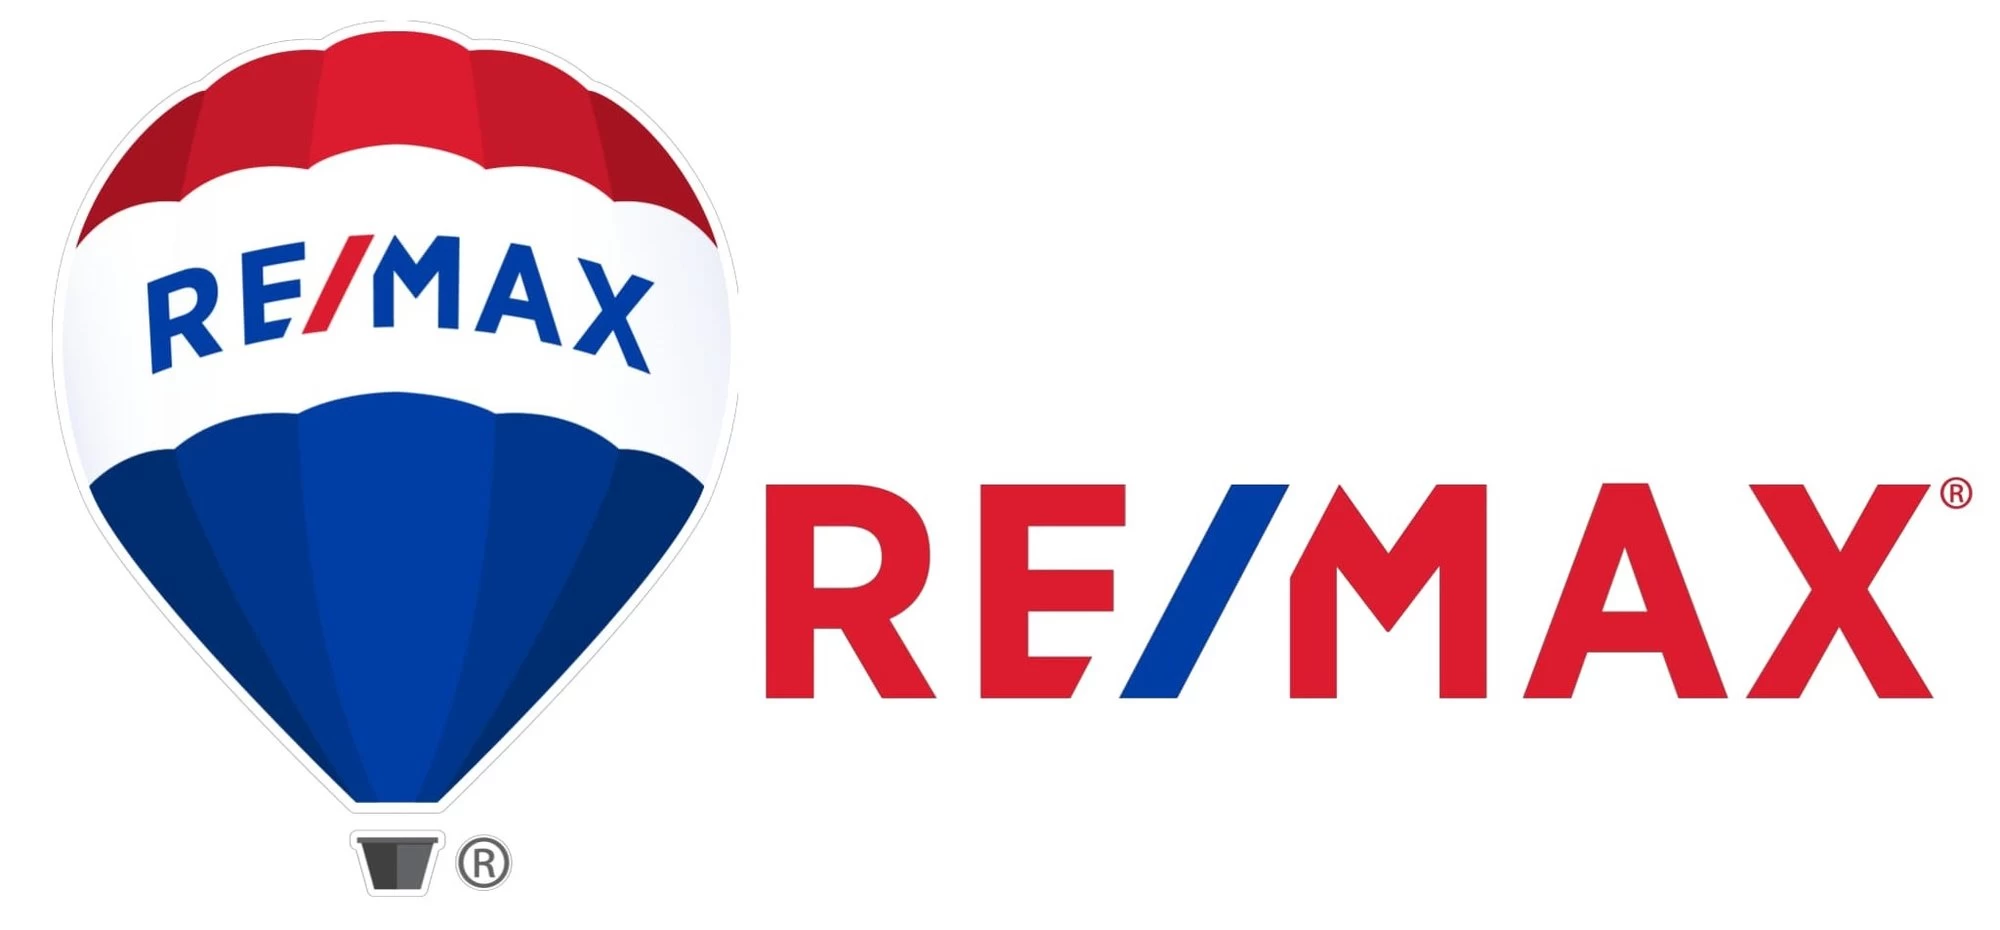 REMAX Franchise Information